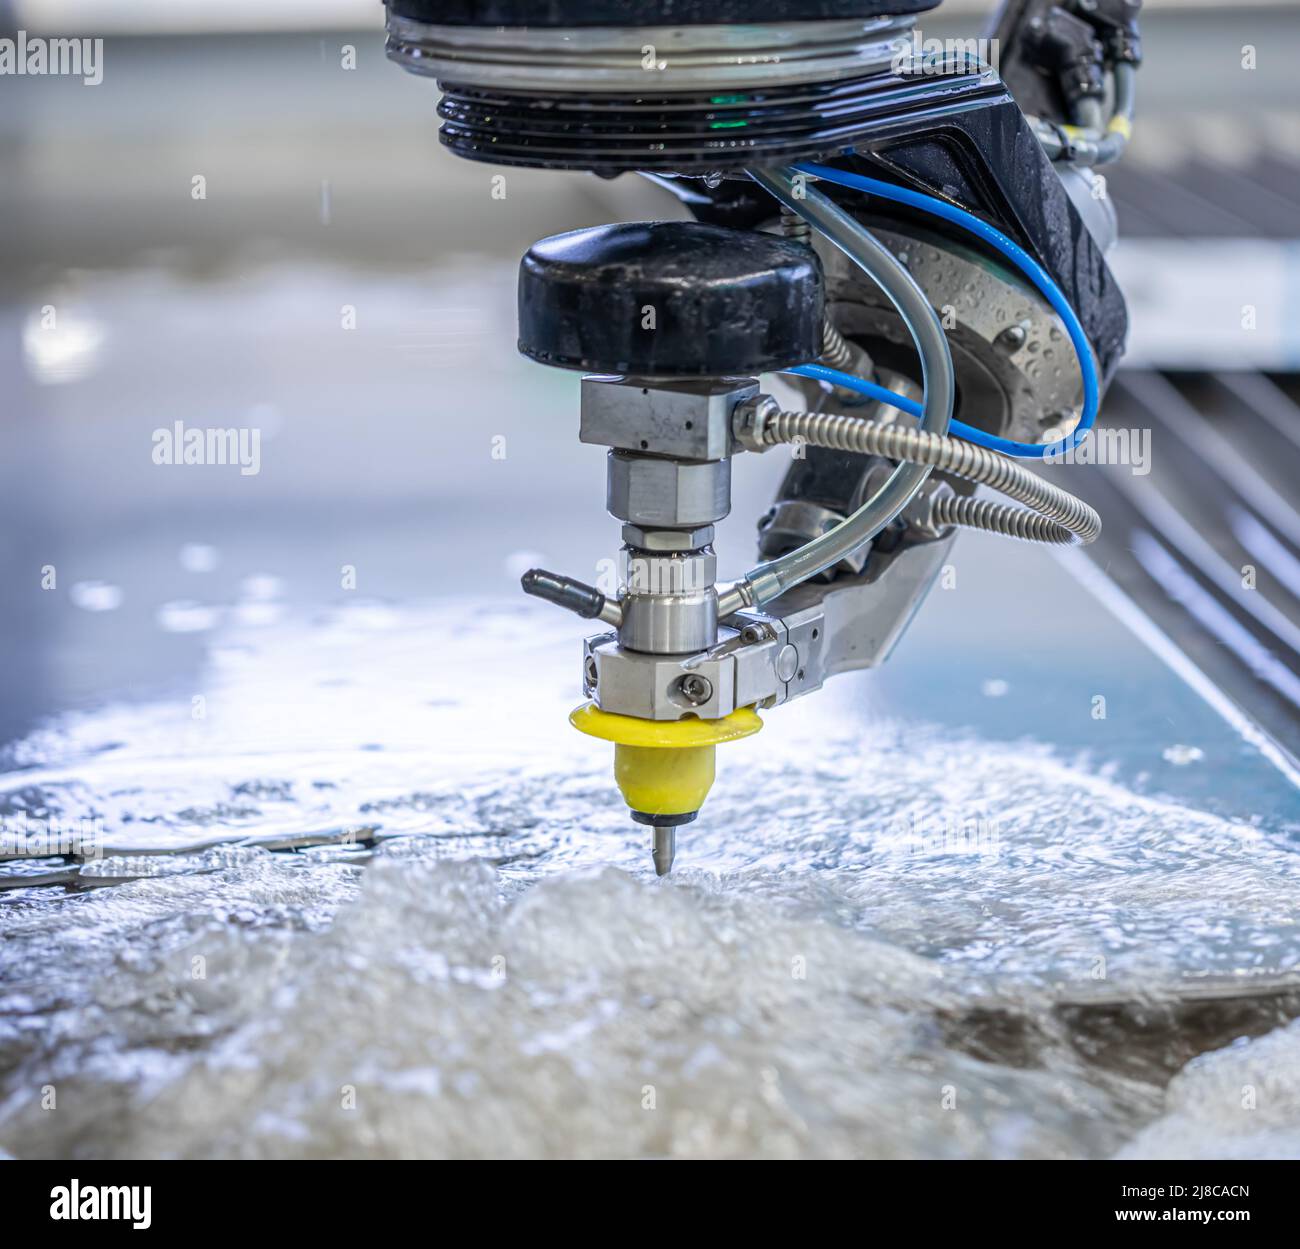 CNC water jet cutting machine modern industrial technology. Stock Photo